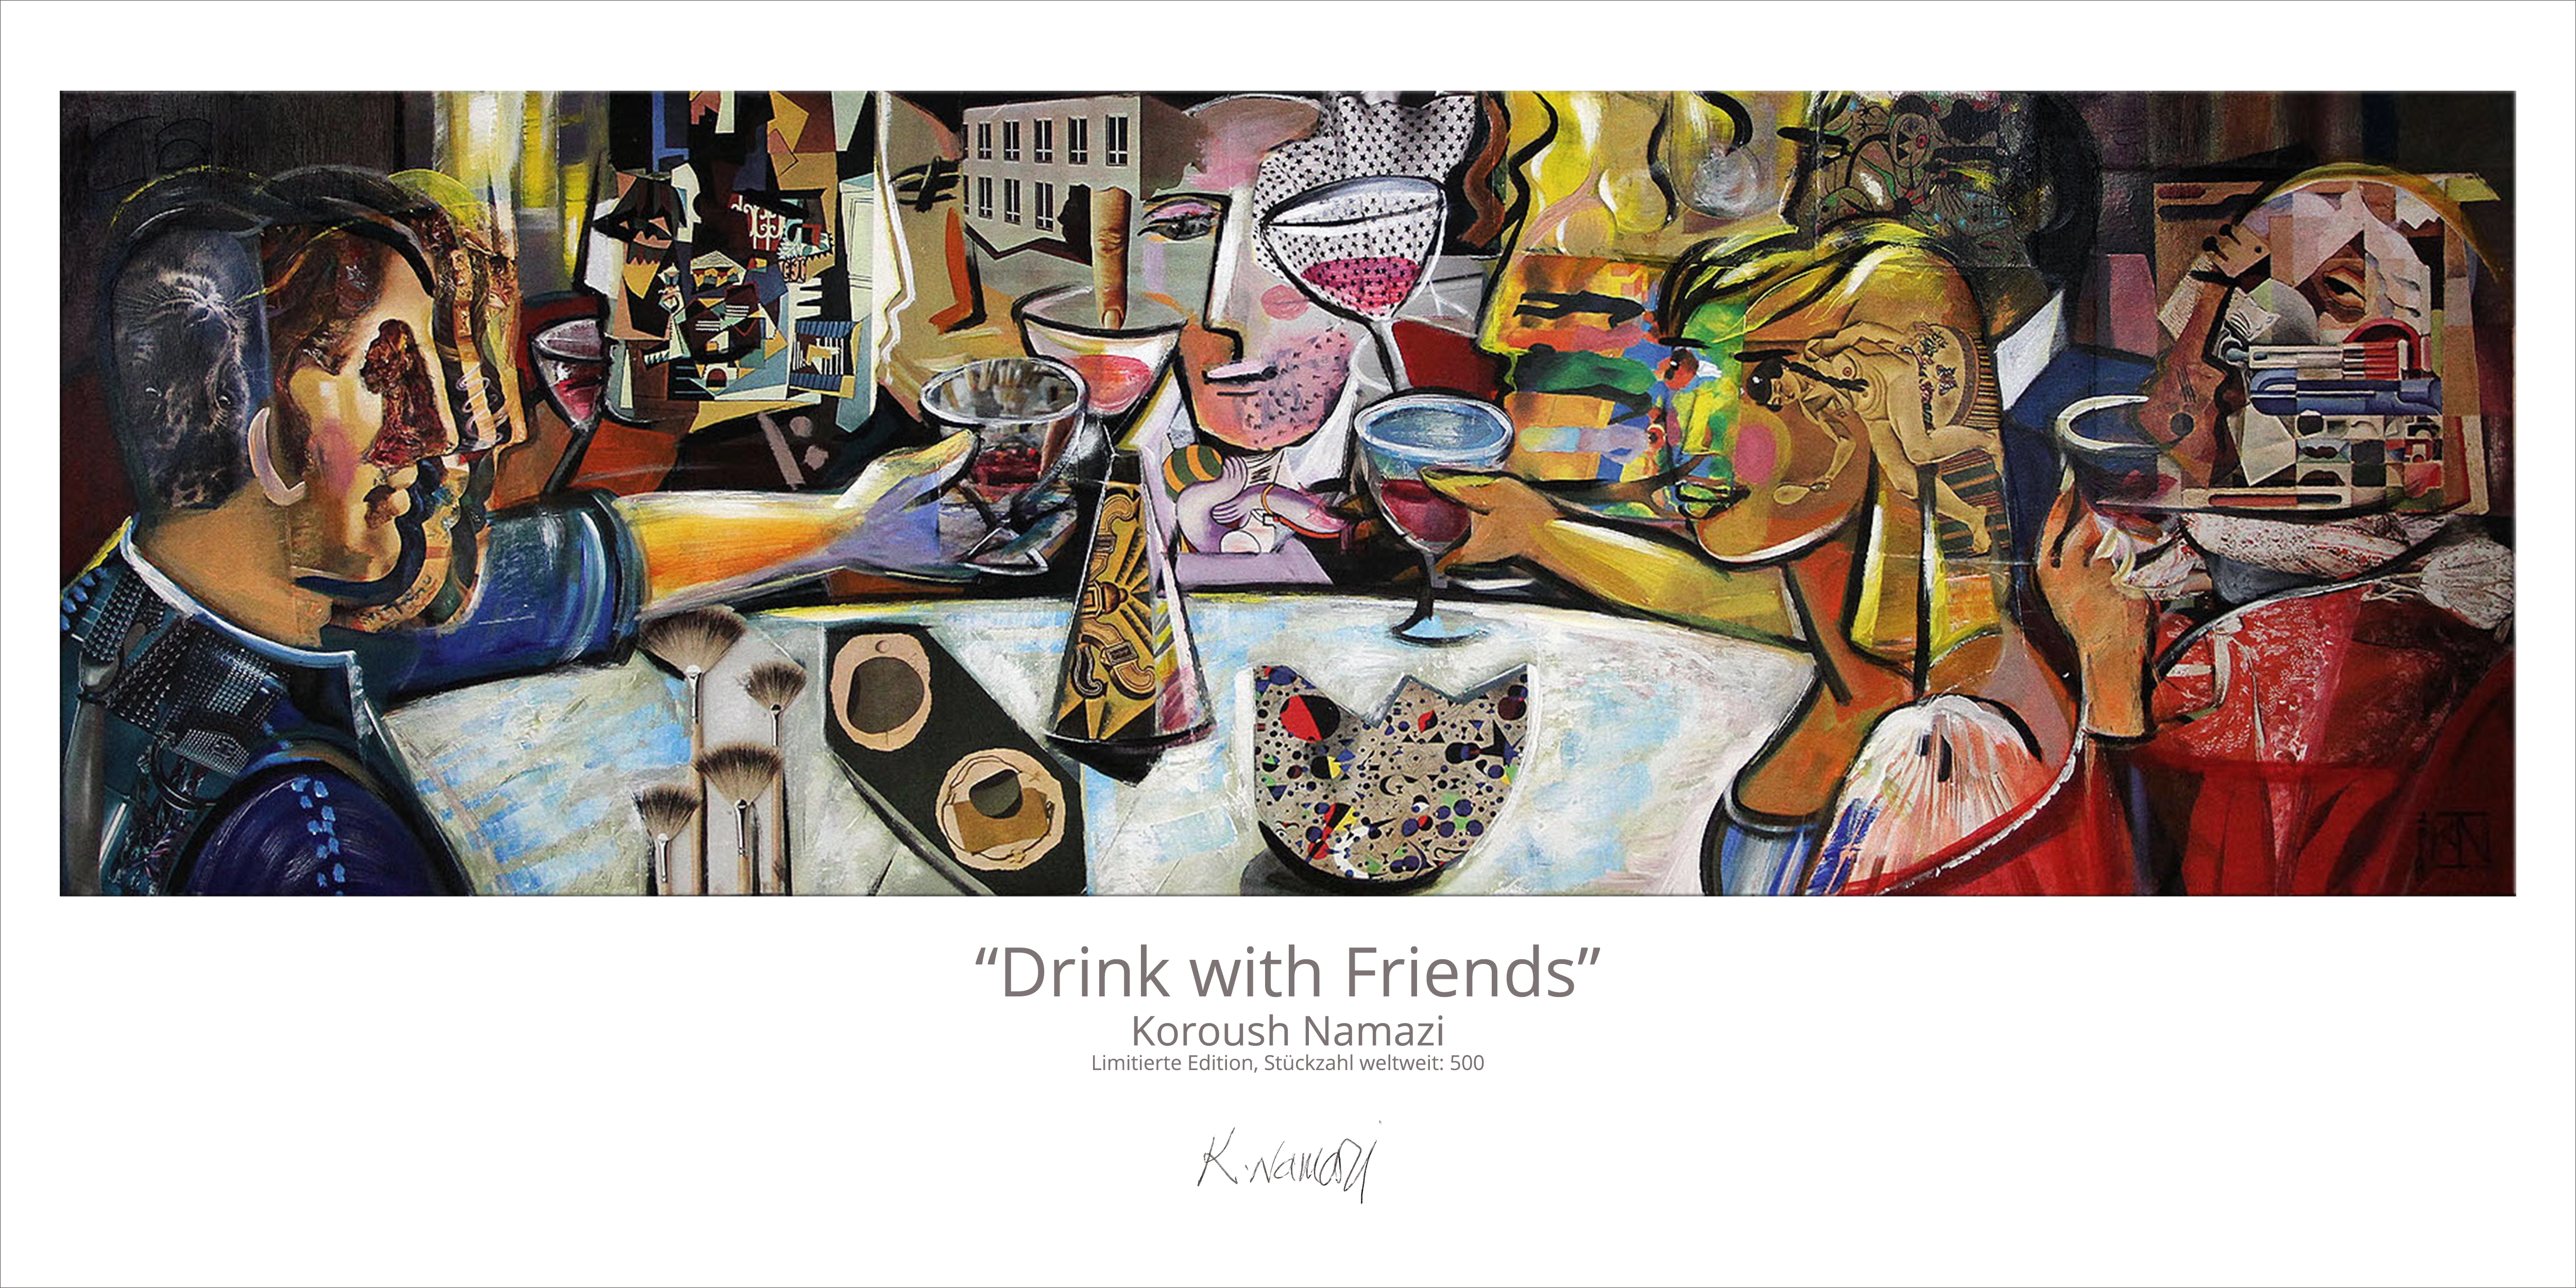 Limitierte Edition auf Papier, K. Namazi: "Drink with Friends", Fineartprint, Kollektion E&K